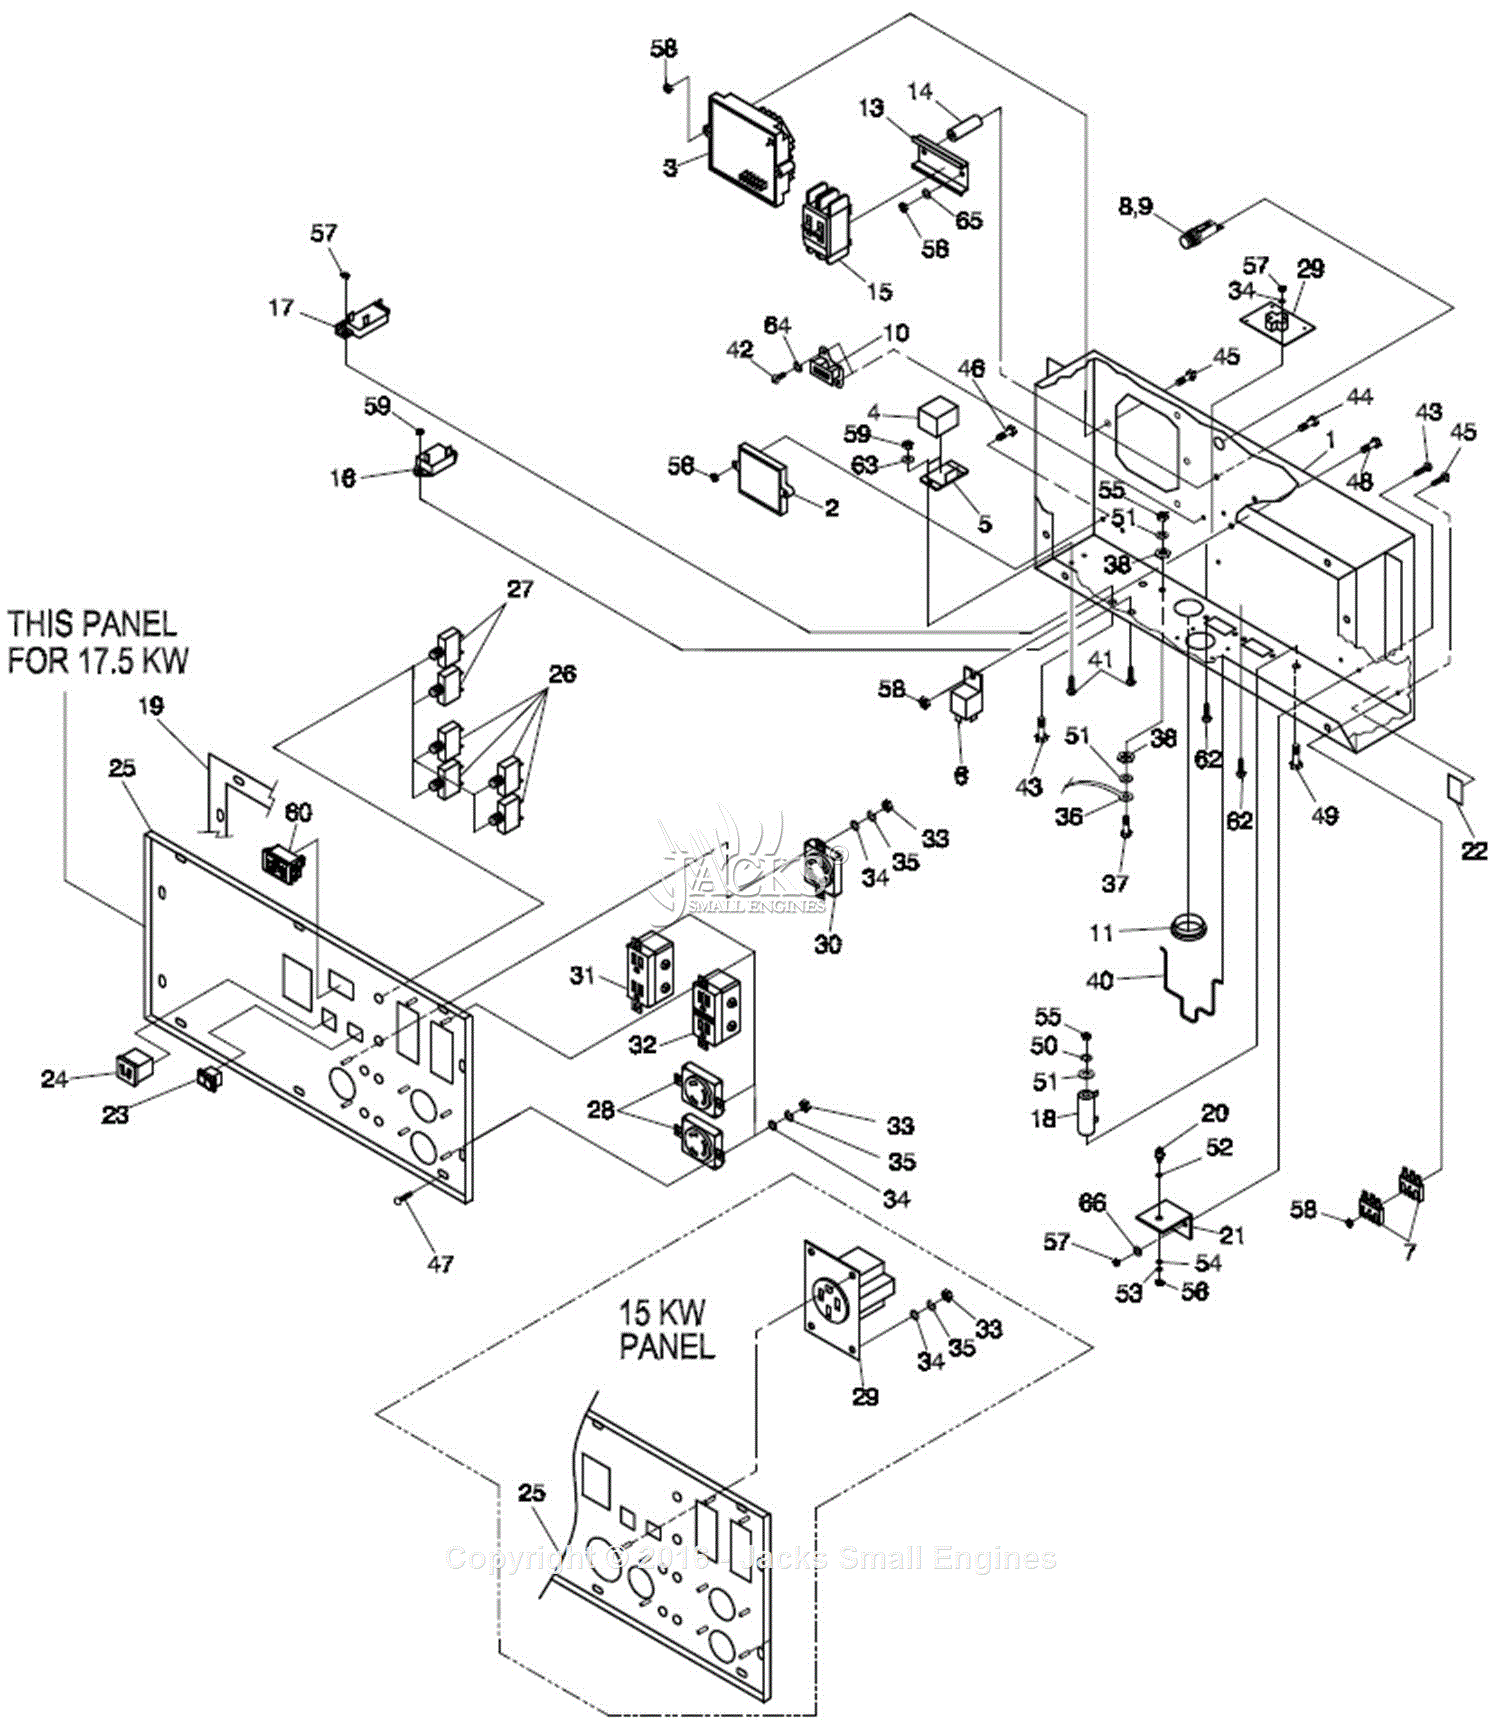 generac wiring diagram wiring diagram papergenerac ignition switch wiring diagram wiring diagram operations generac 11kw wiring